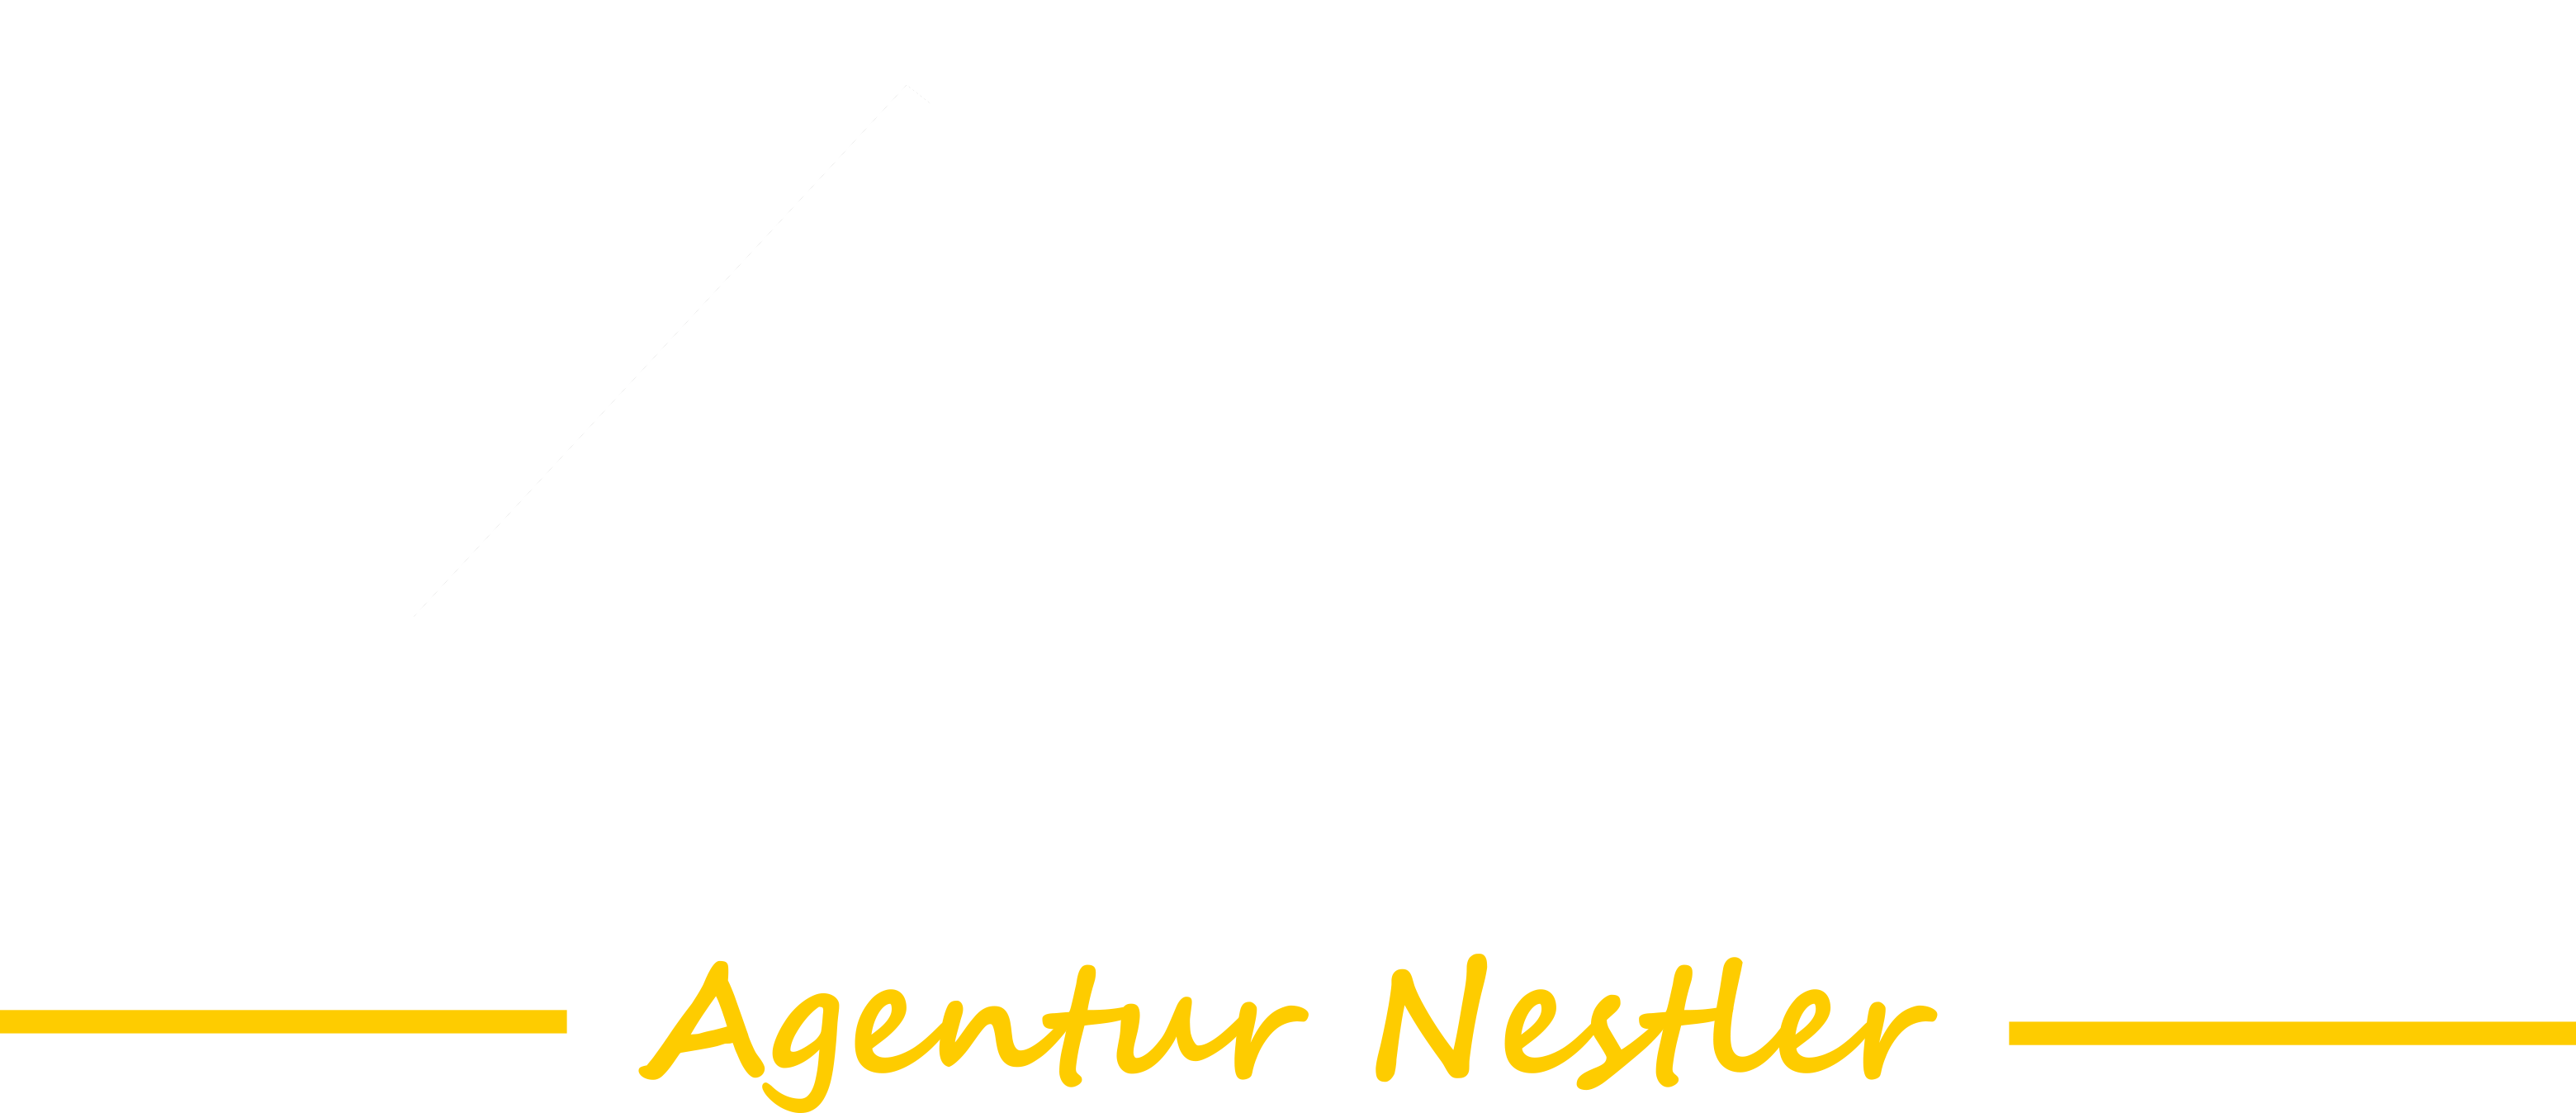 Agentur Nestler